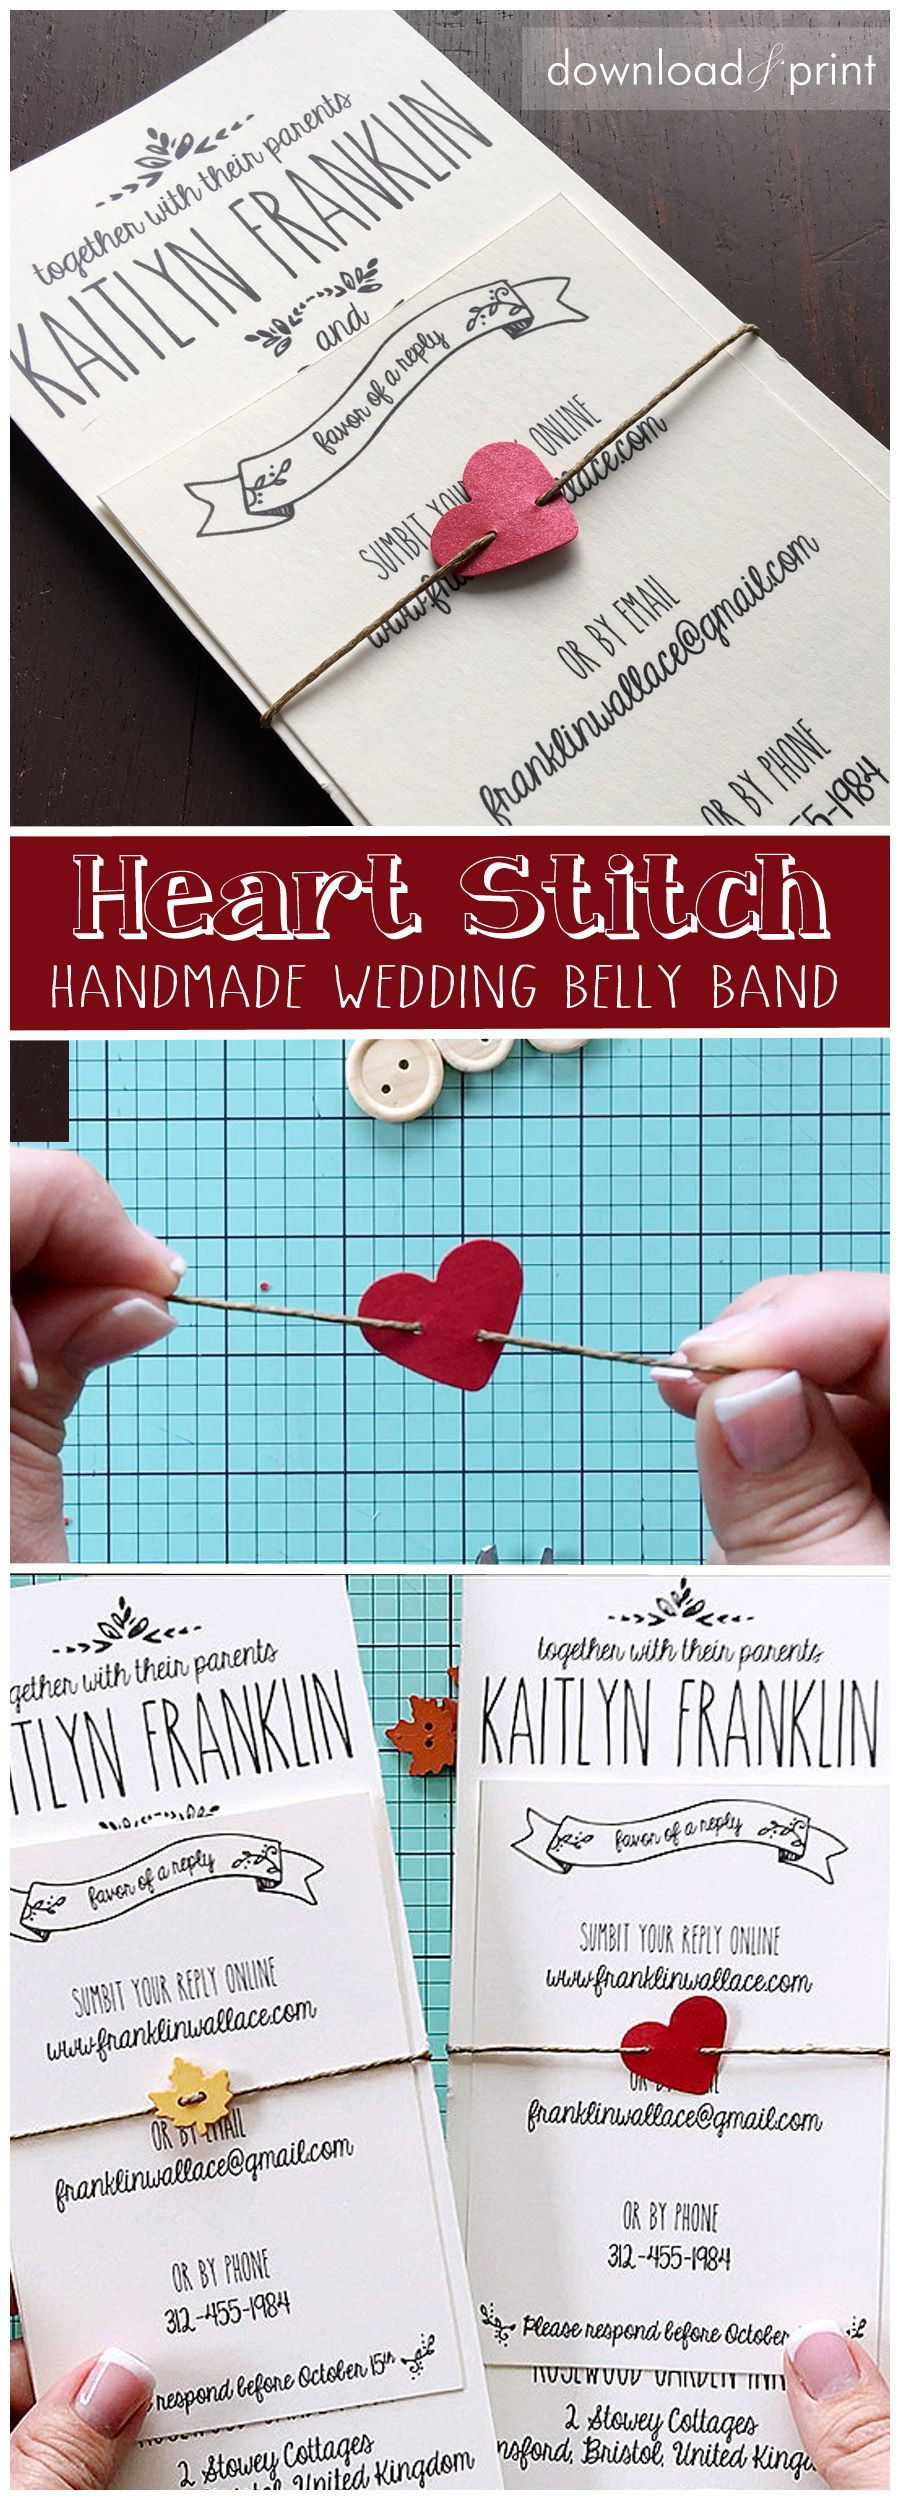 DIY Belly Bands For Wedding Invitations
 Heart Stitch Handmade Wedding Belly Band